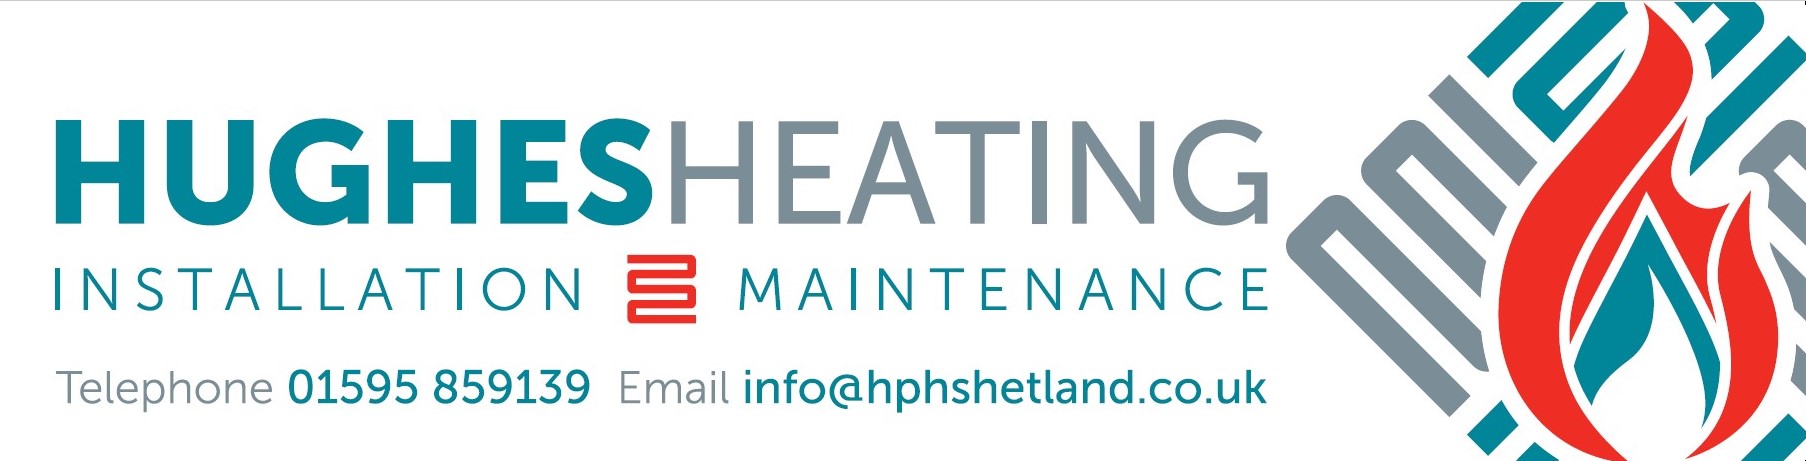 Hughes Heating Services (Shetland) Ltd Logo